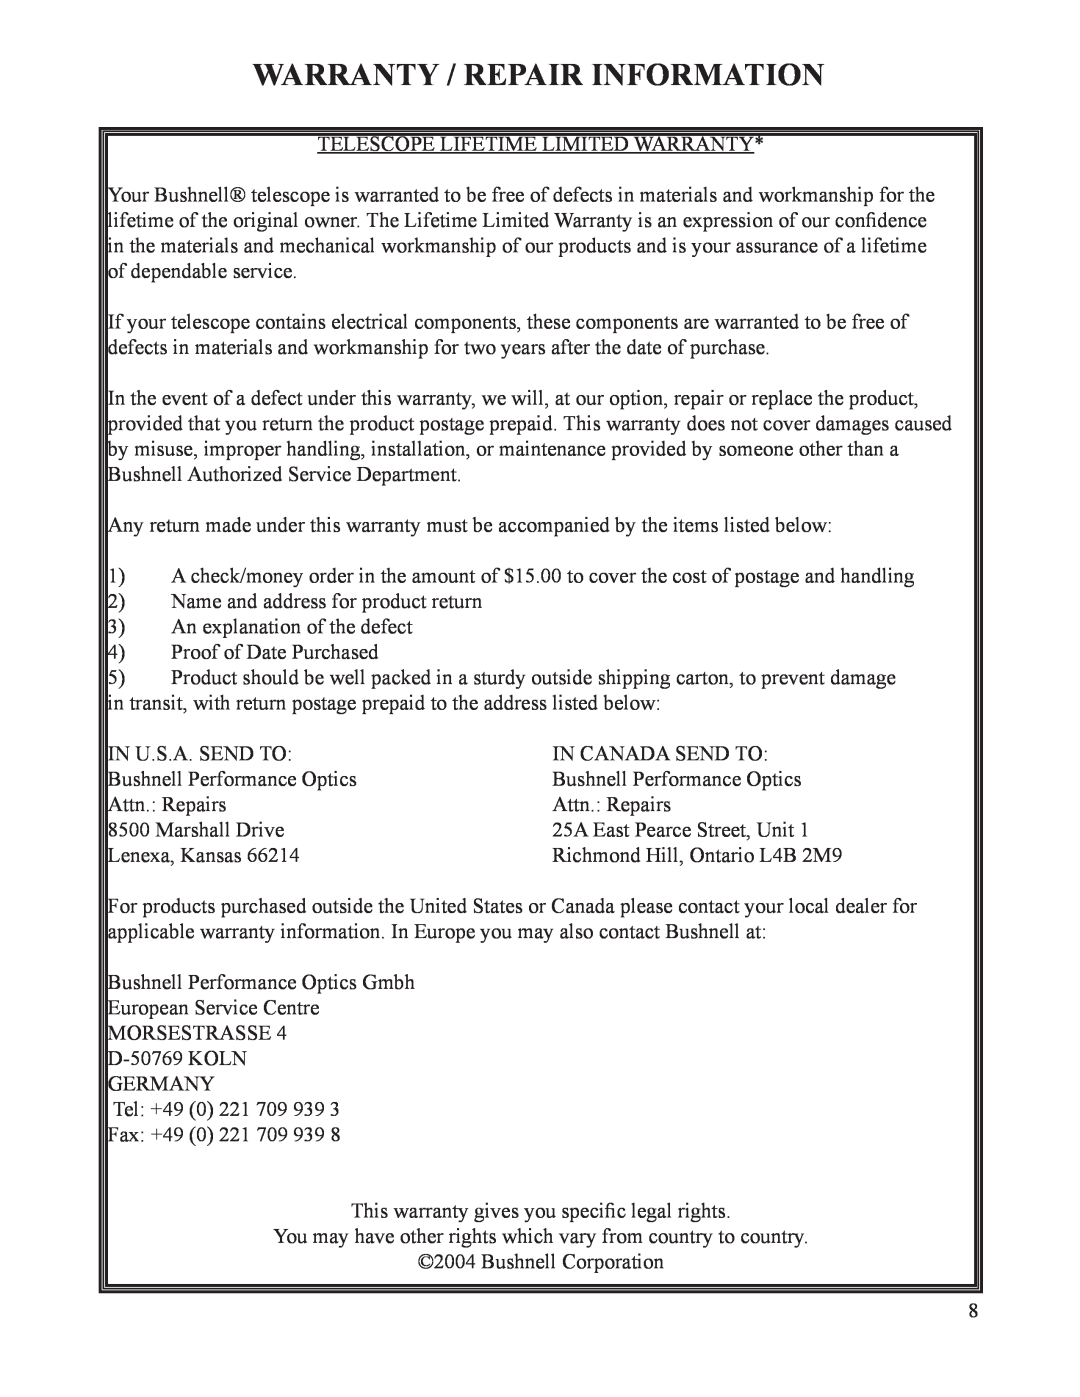 Bushnell 3" REFLECTOR manual Warranty / Repair Information 